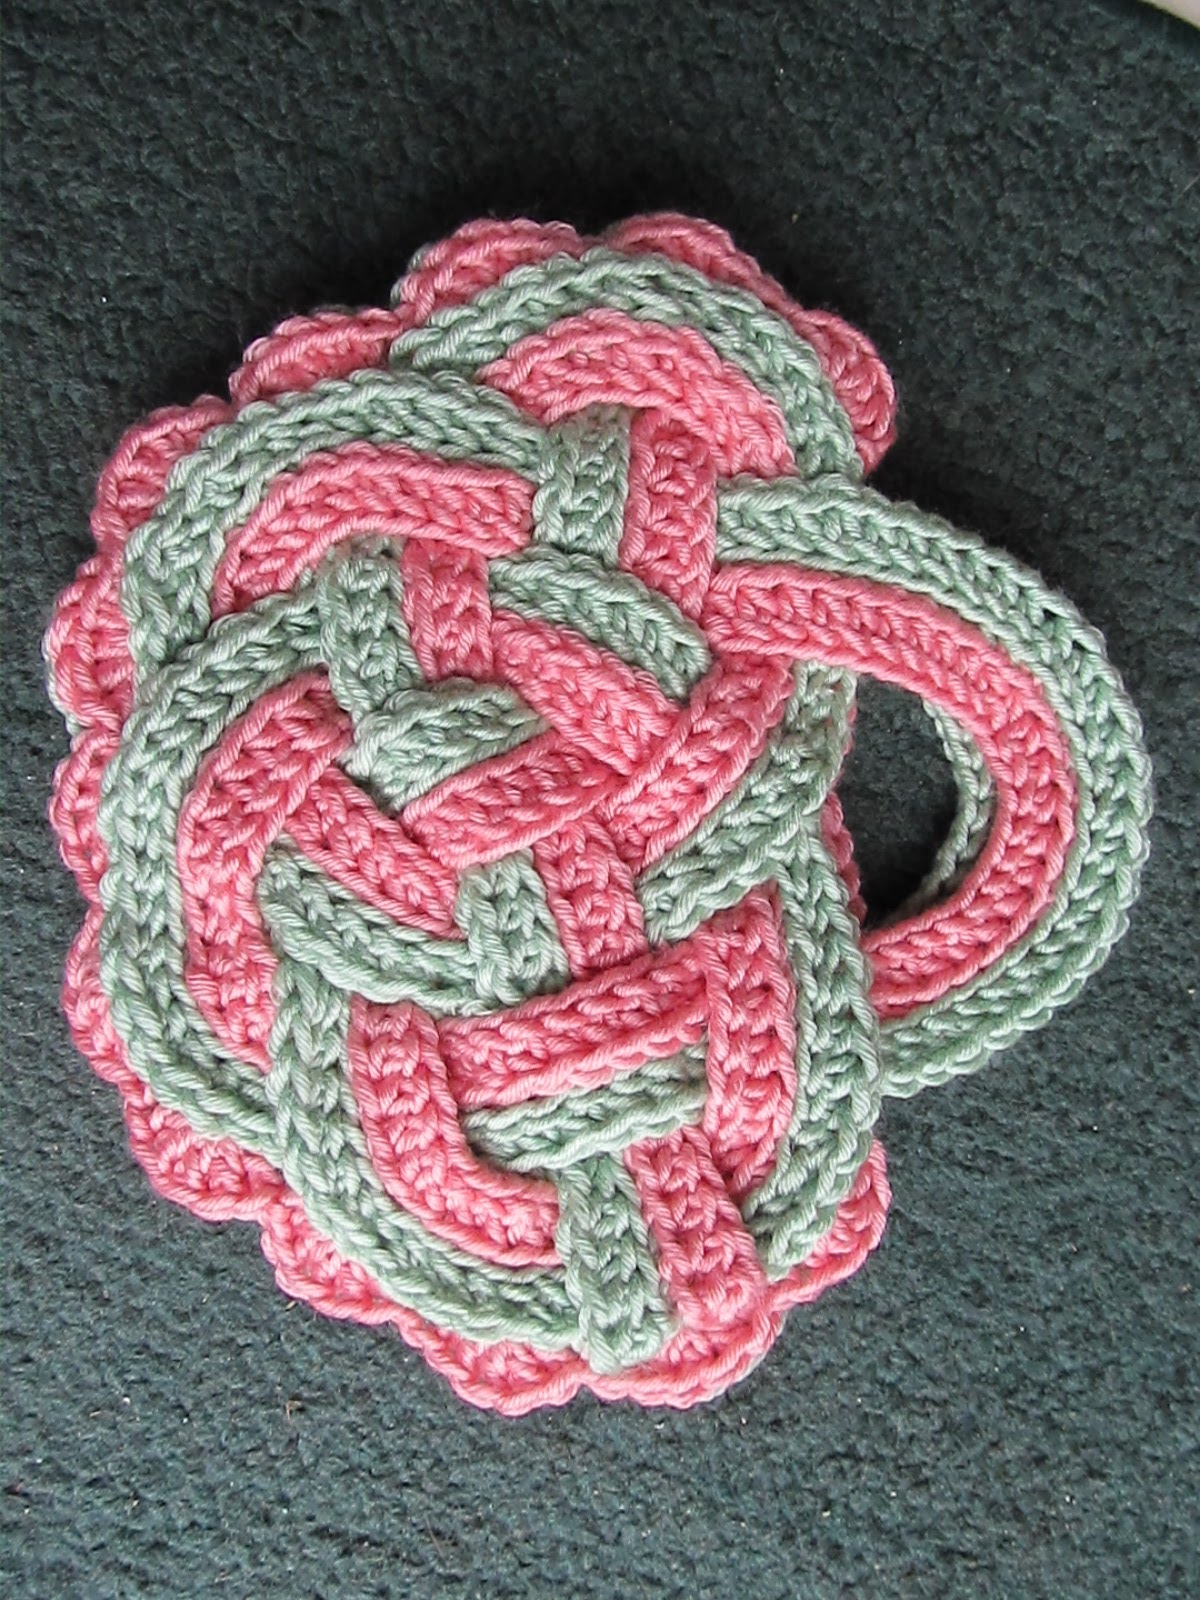 Ravelry Patterns Crochet Patterns Coming Soon To Ravelry Celtic Knot Crochet